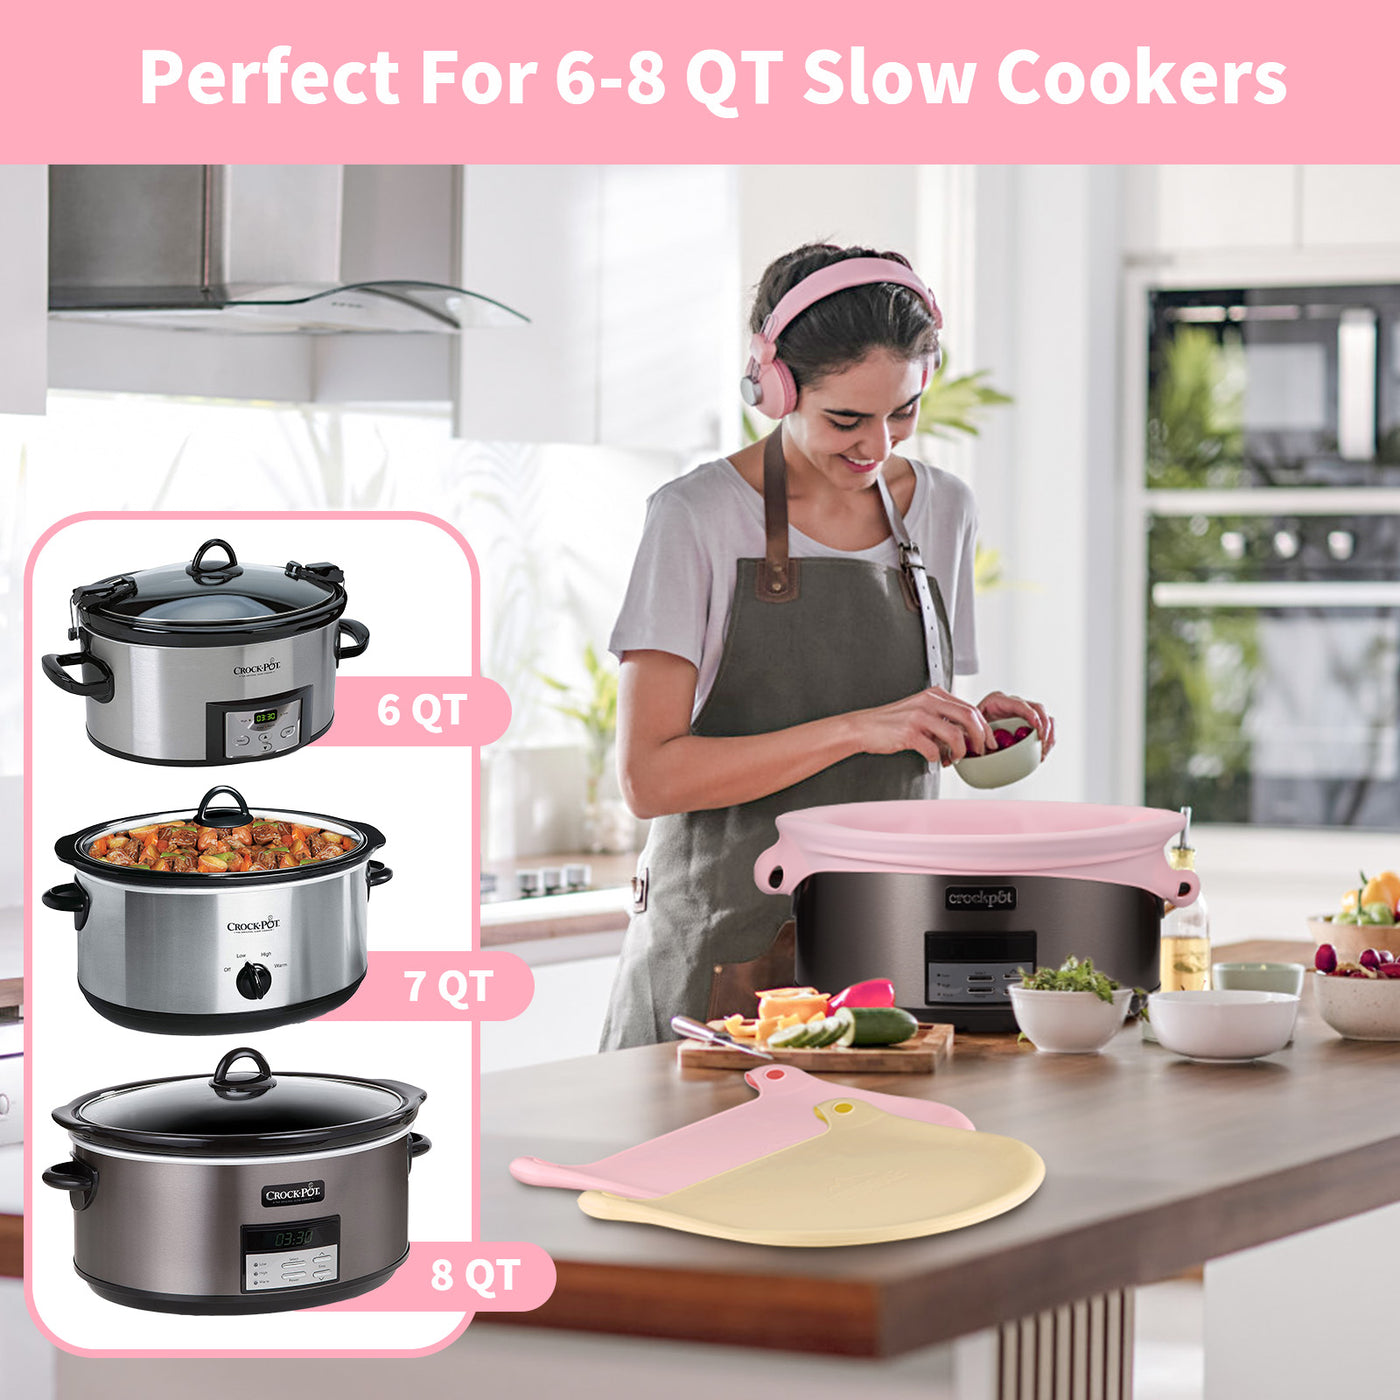 OUTXE 3 Pack Silicone Slow Cooker Liners, Reusable Fit 6-8 Quarts Croc